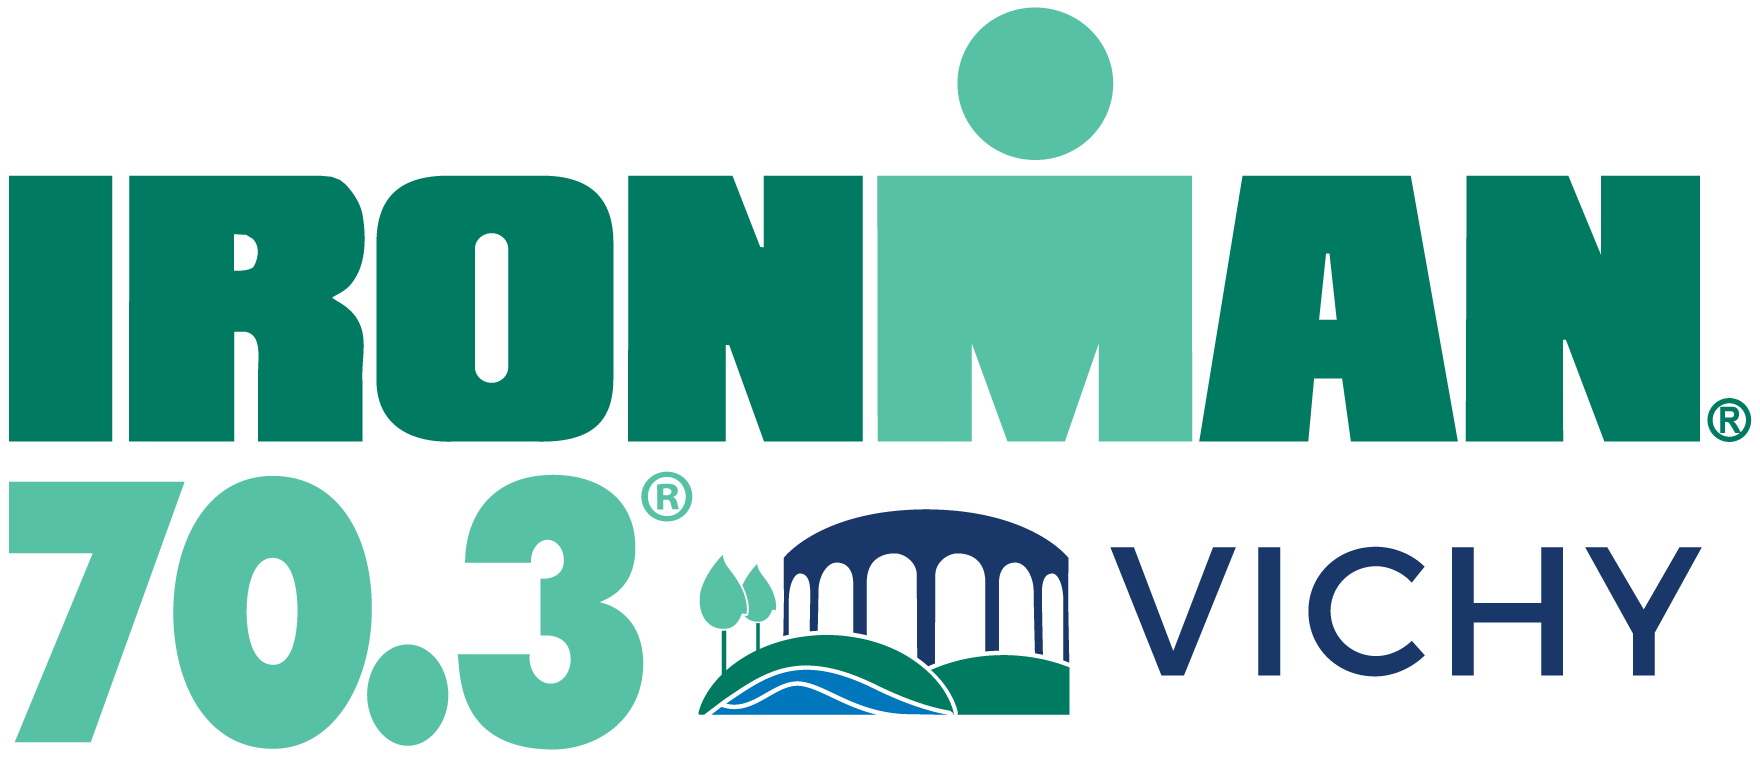 Official IRONMAN 70.3 Vichy race logo